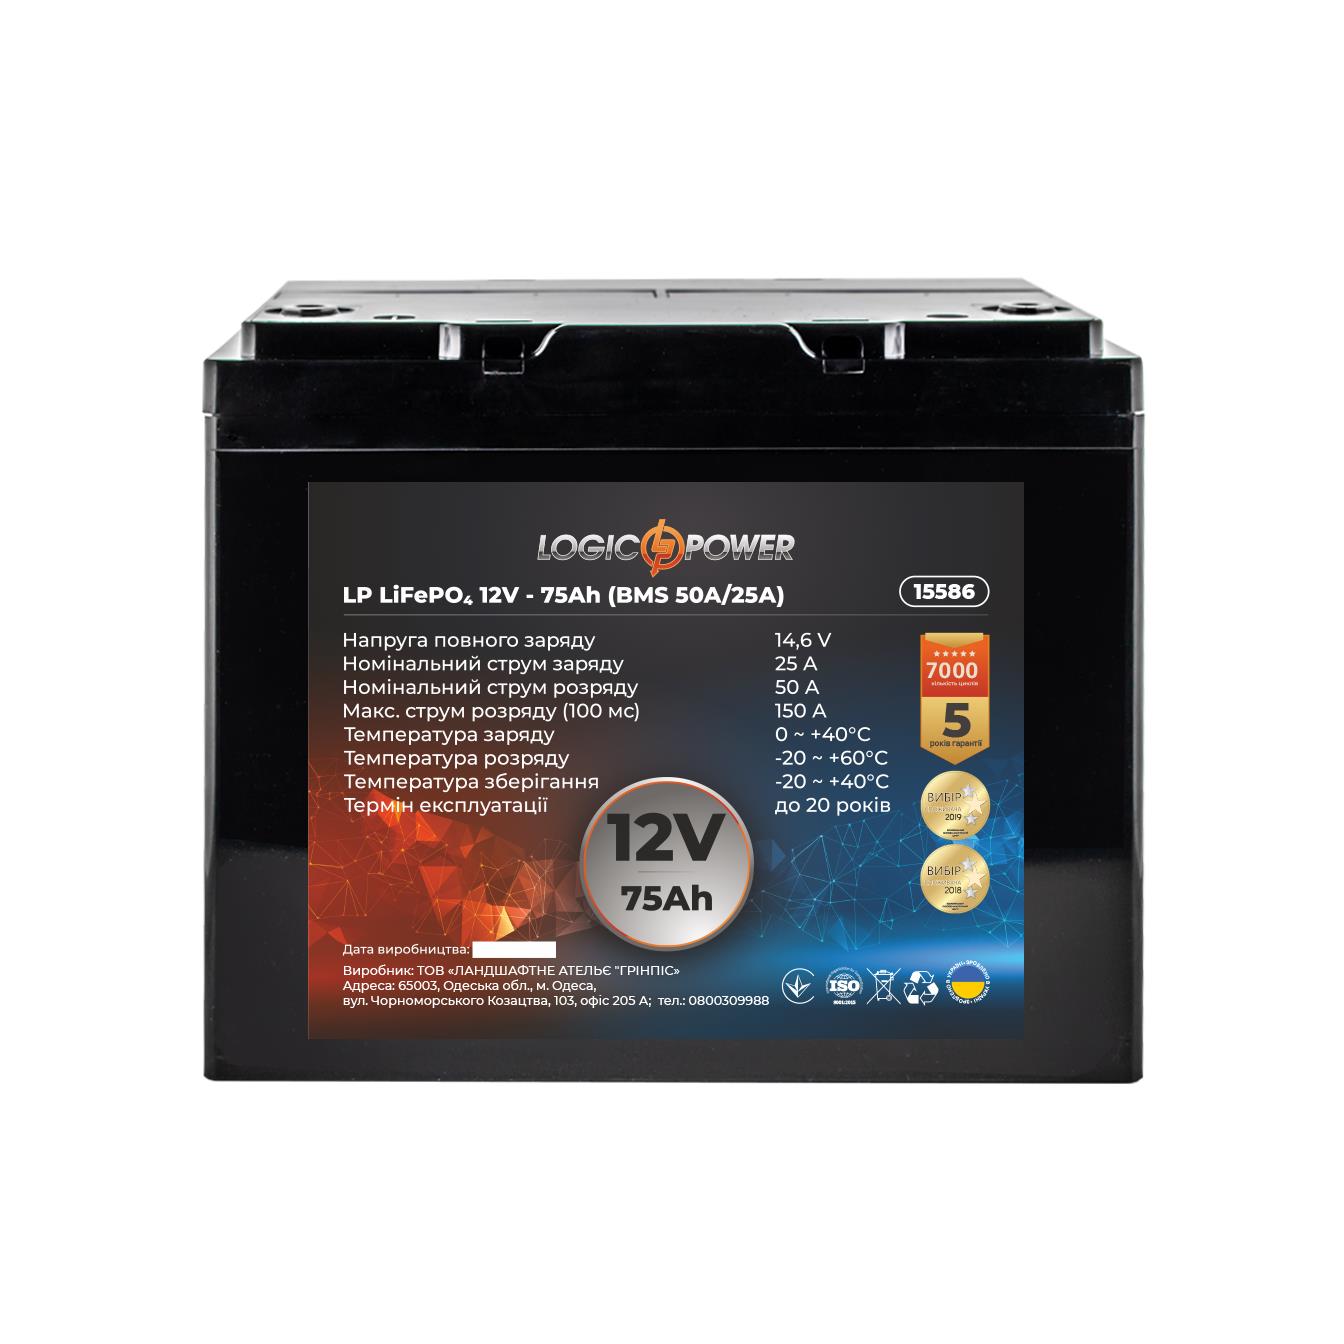 Аккумулятор литий-железо-фосфатный LogicPower LP LiFePO4 BYD 12V - 75 Ah (BMS 50А/25A) пластик (15586) в интернет-магазине, главное фото